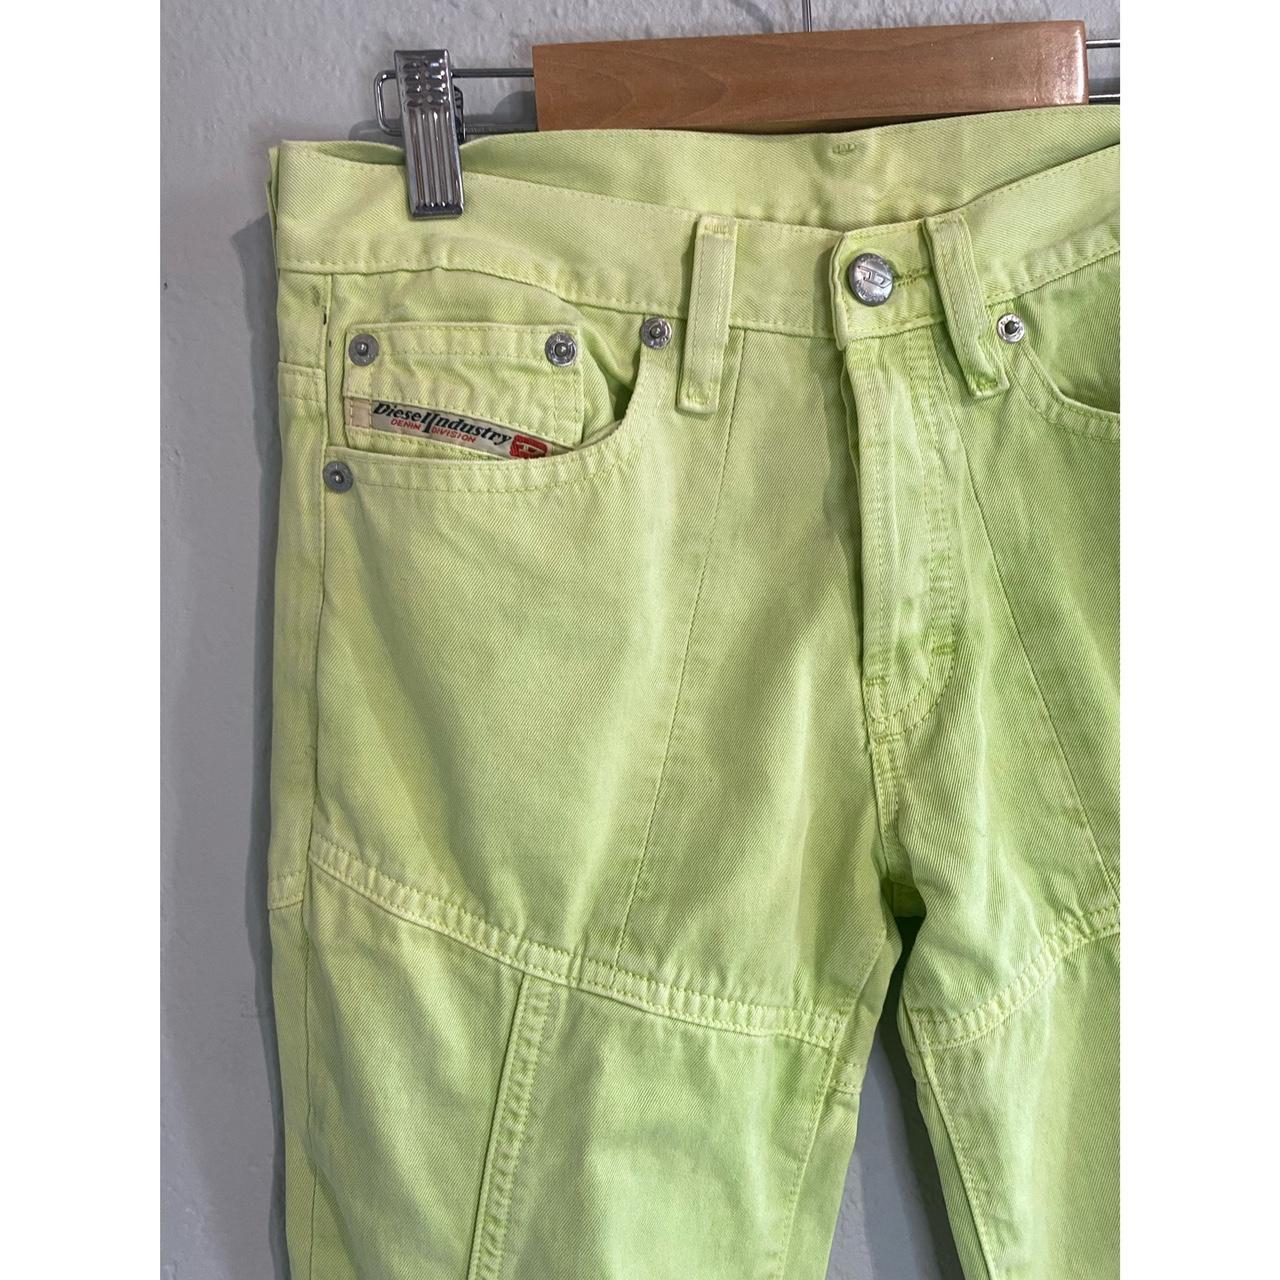 Amazing Y2K Diesel jeans lime green low rise flare... - Depop